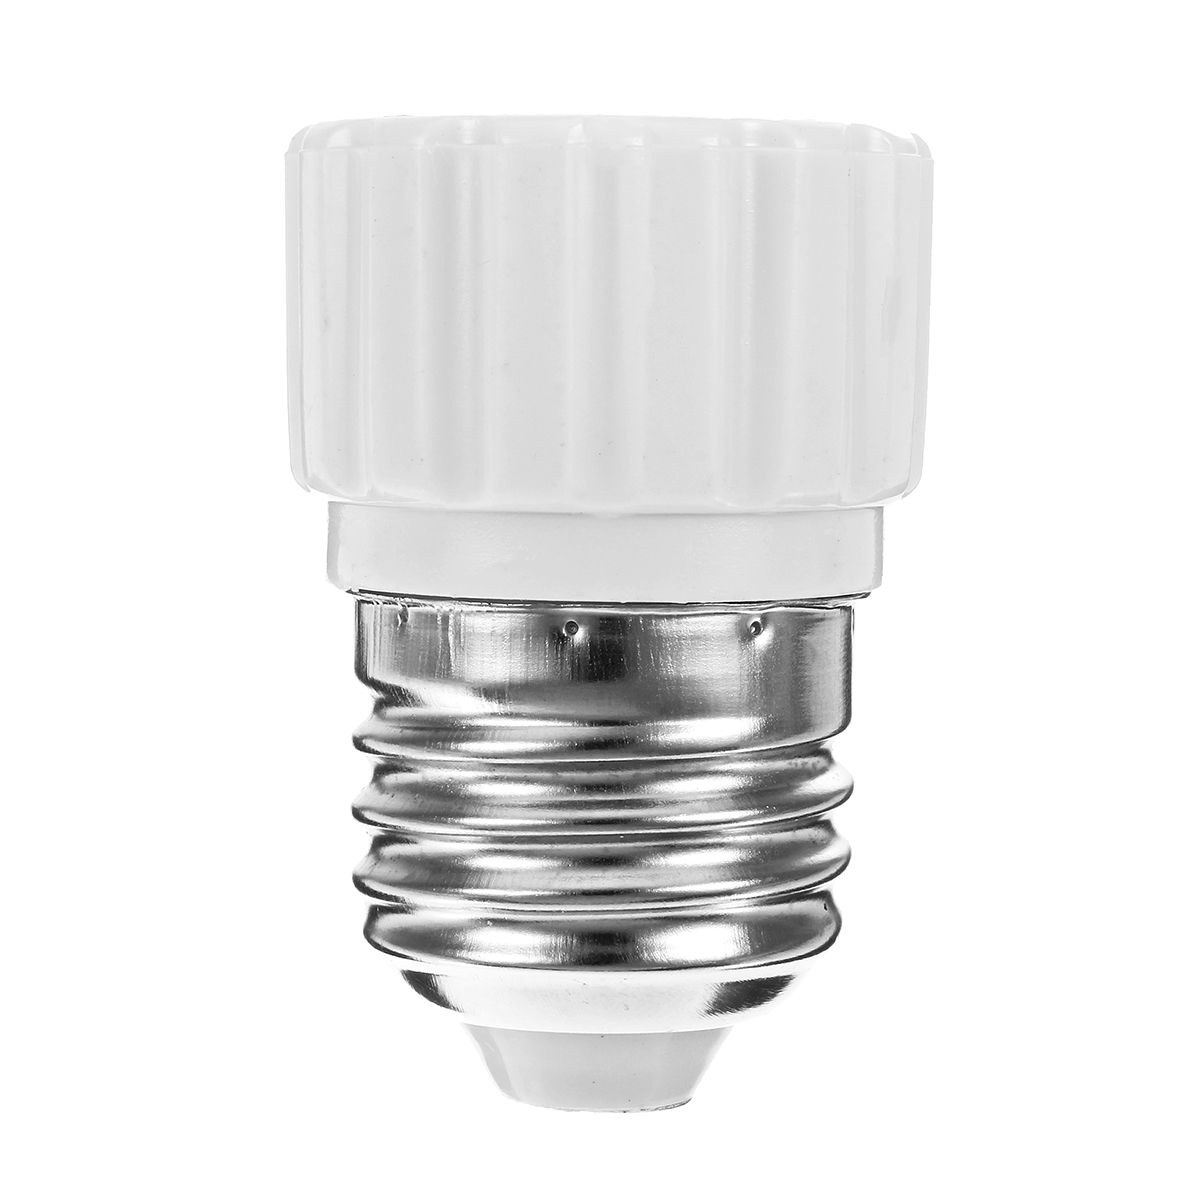 20PCS-E27-to-GU10-Light-Lamp-Bulb-Adapter-Converter-1372914